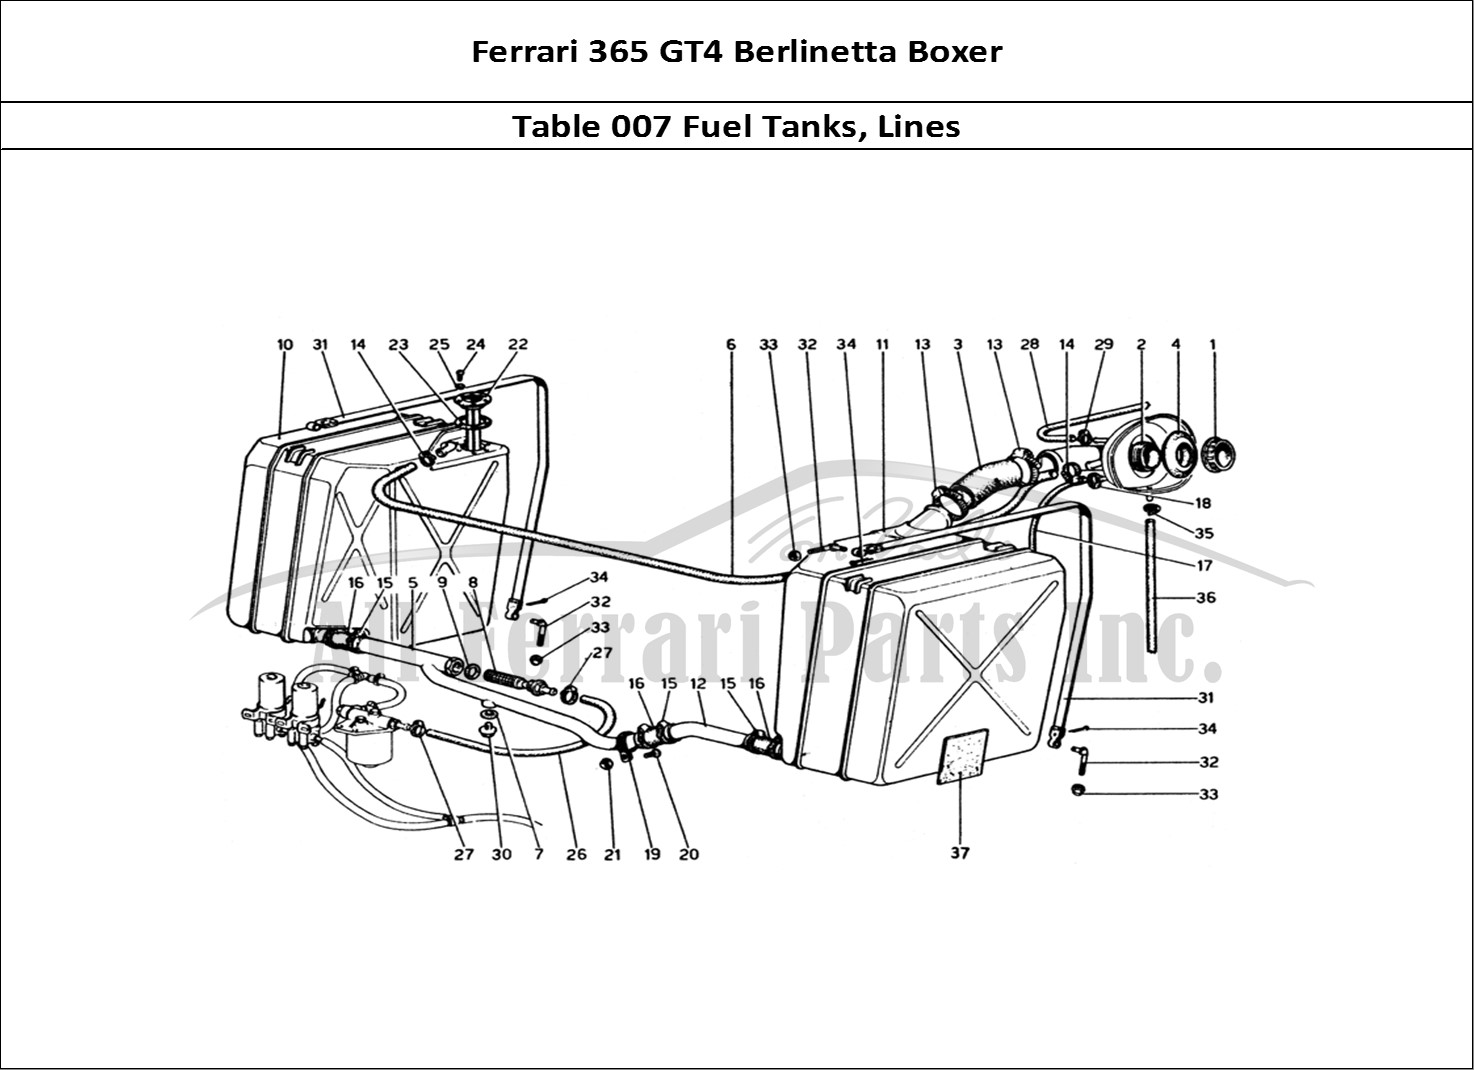 Ferrari Parts Ferrari 365 GT4 Berlinetta Boxer Page 007 Fuel Tanks and Pipes